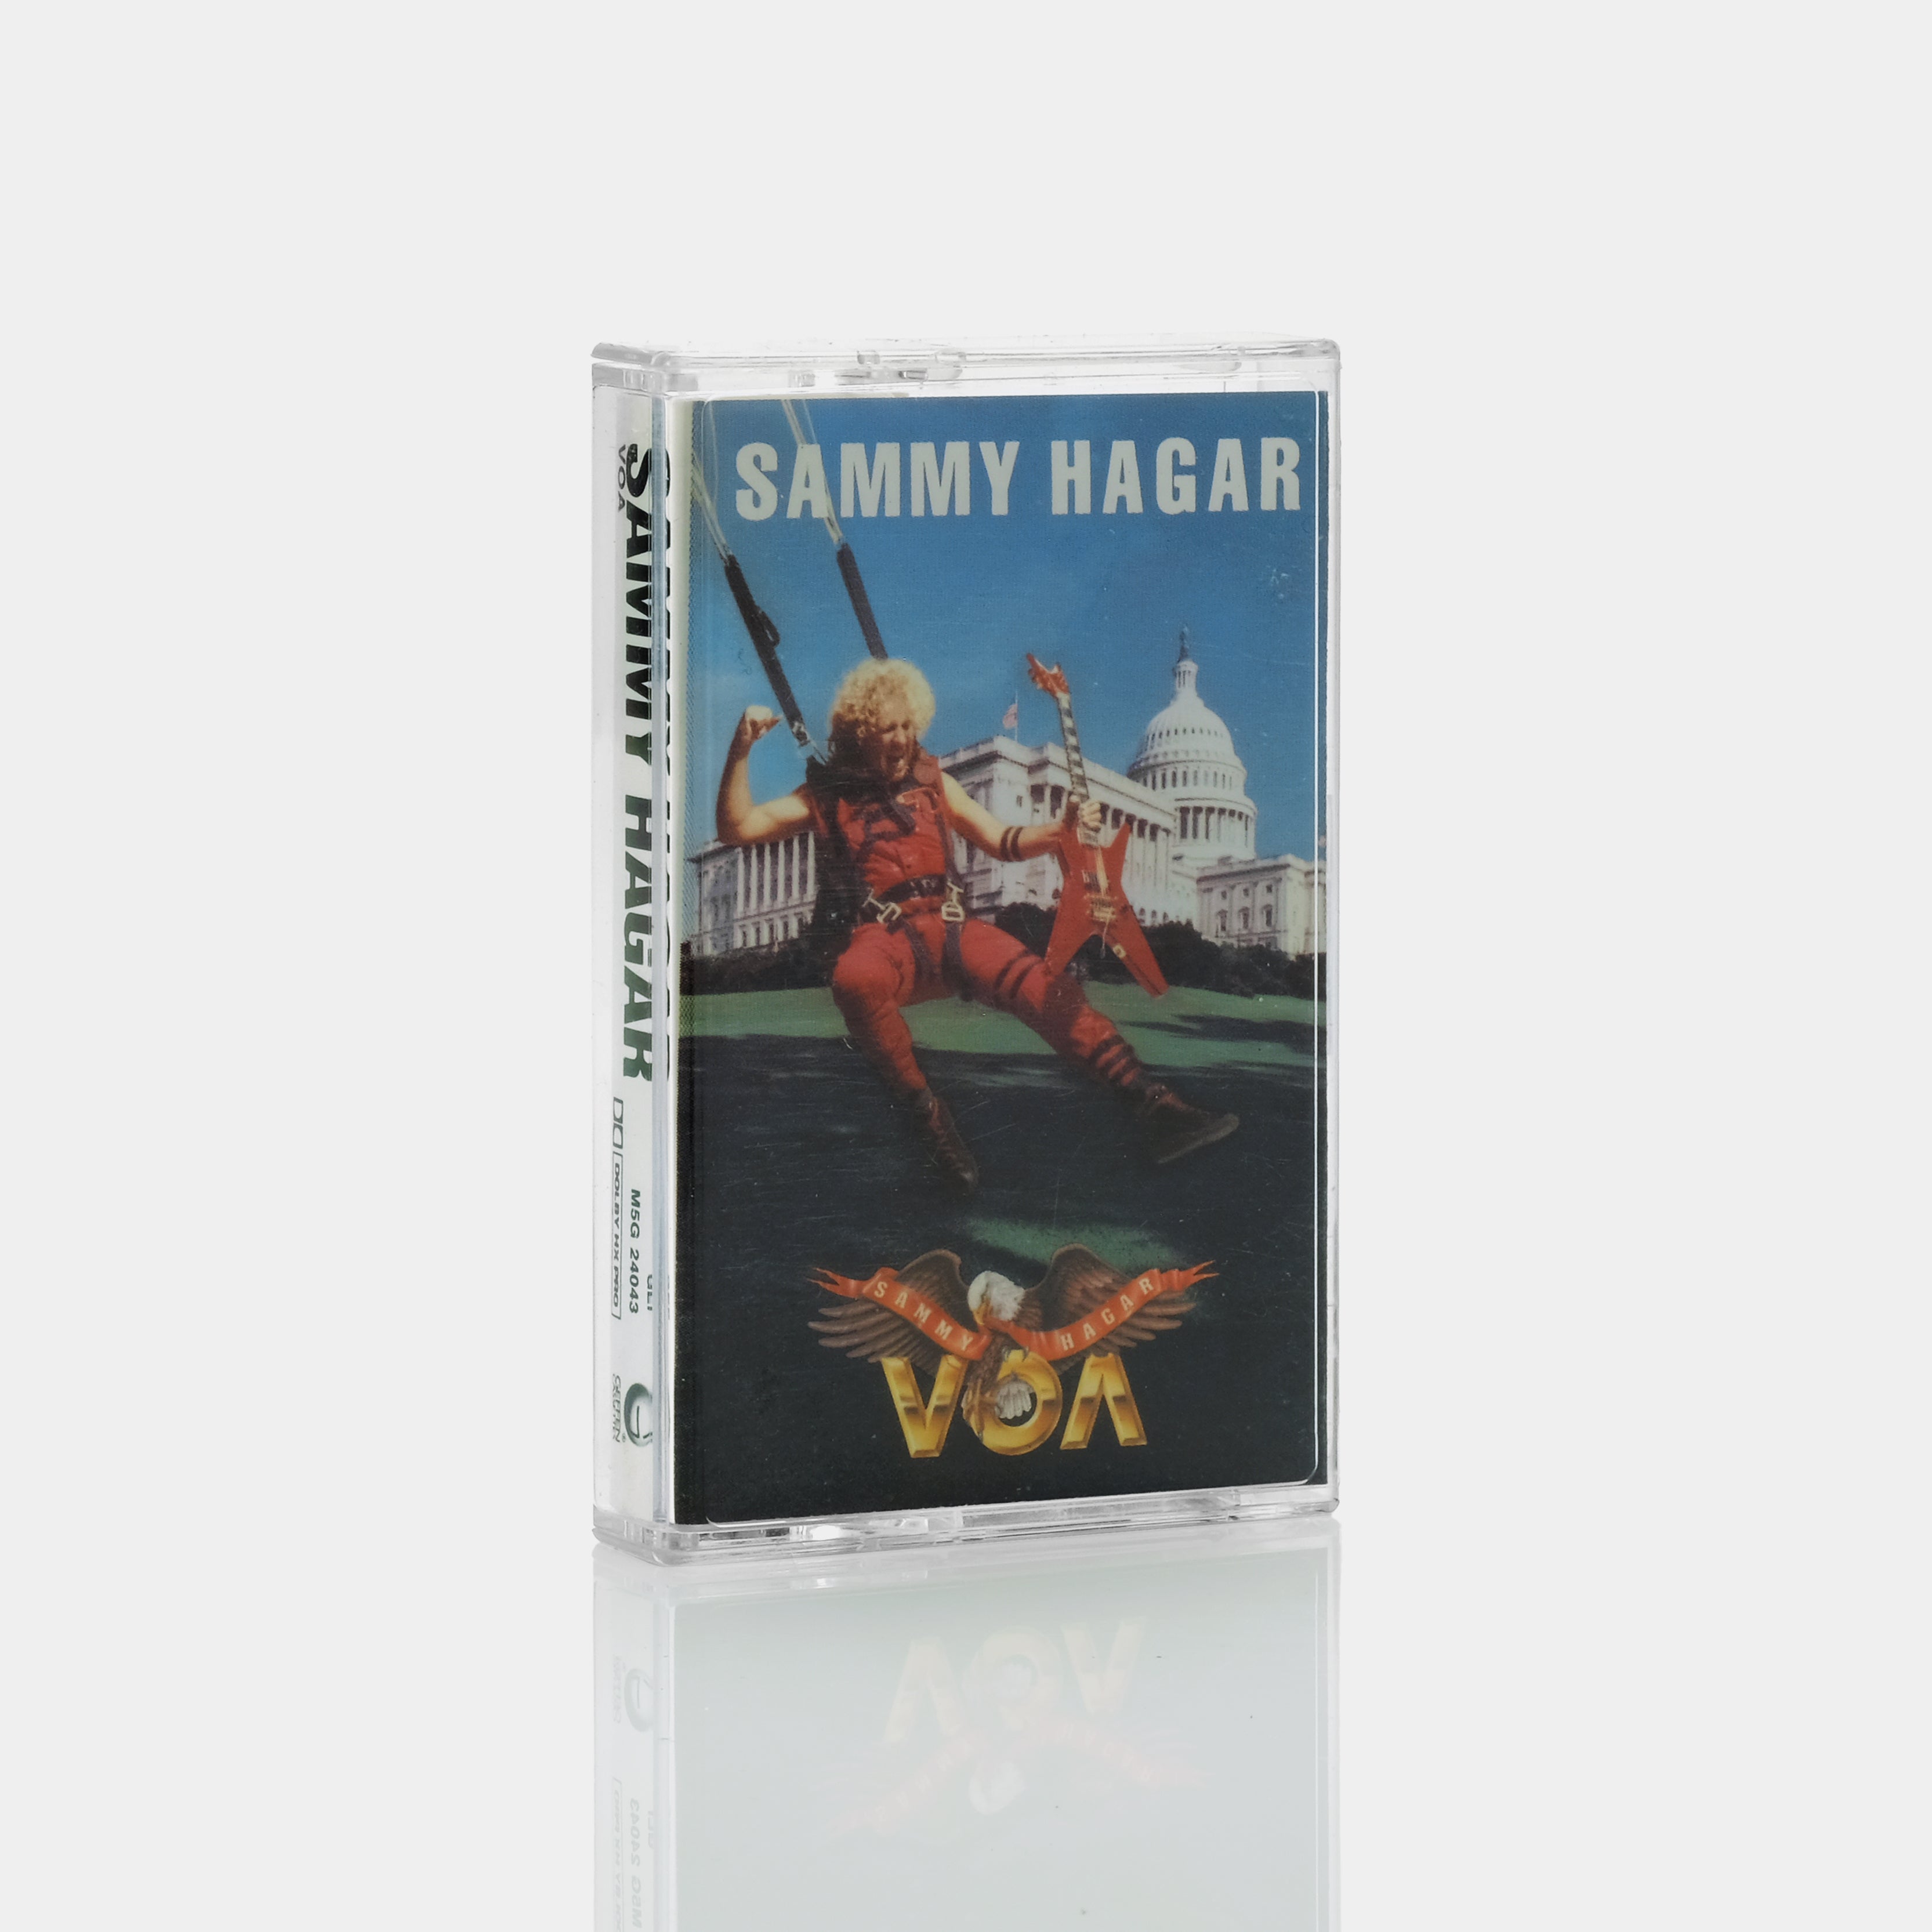 Sammy Hagar - VOA Cassette Tape